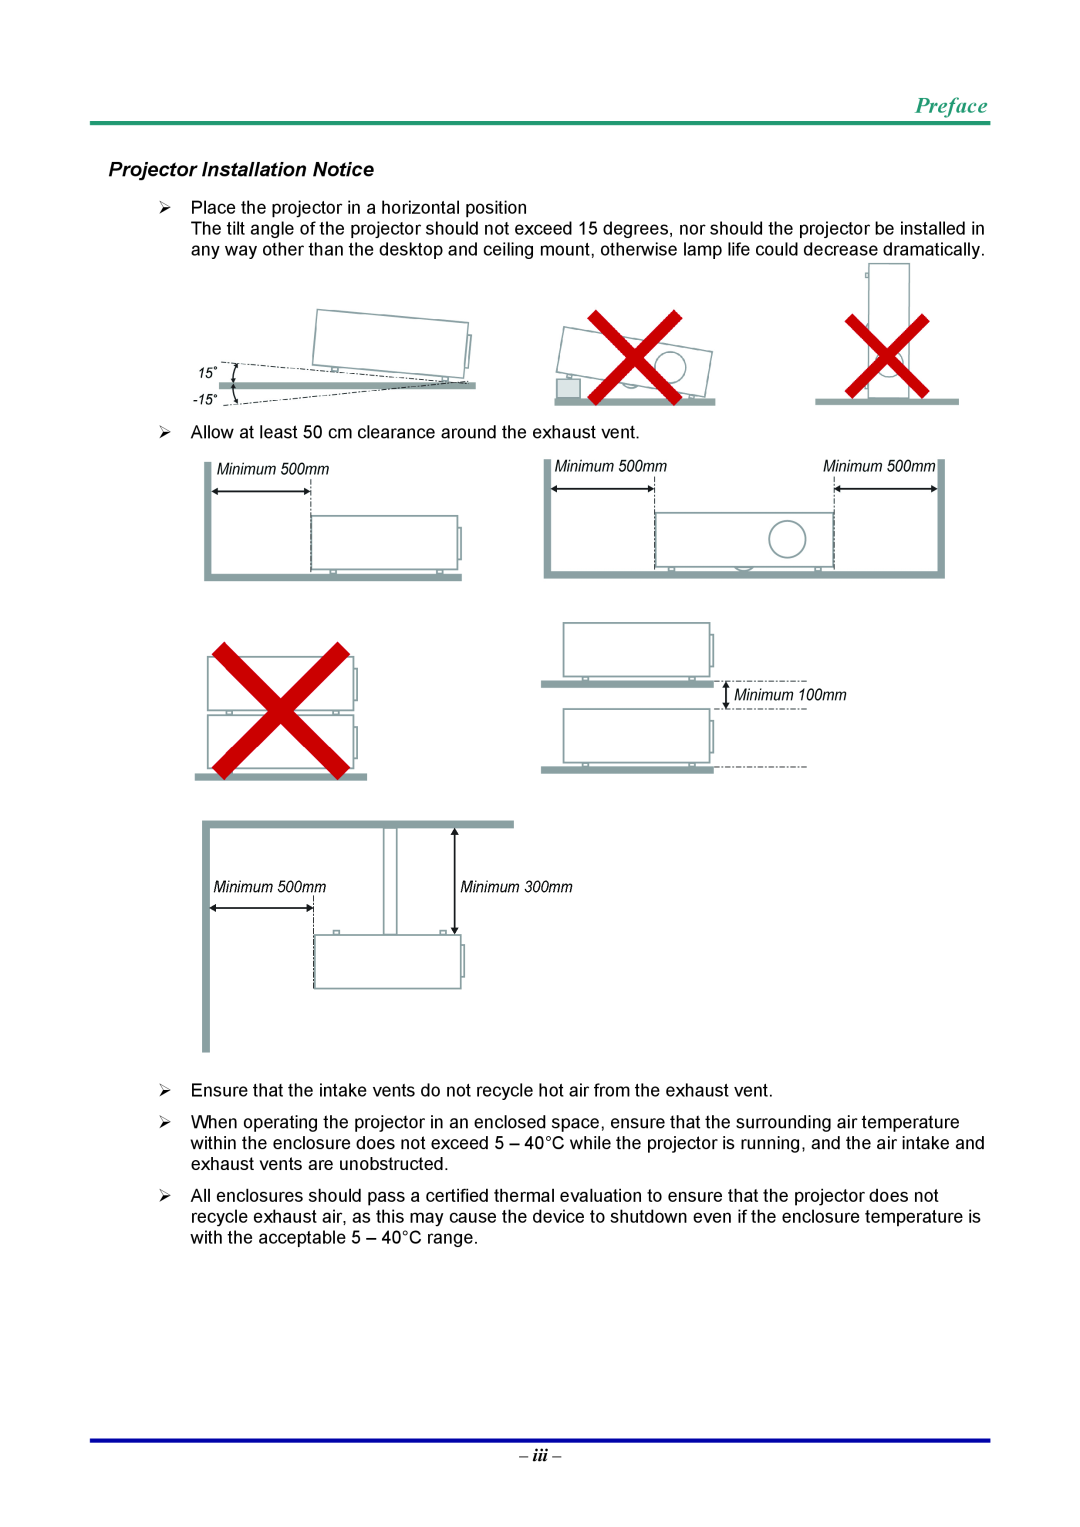 Vivitek D7 user manual Preface, Projector Installation Notice 